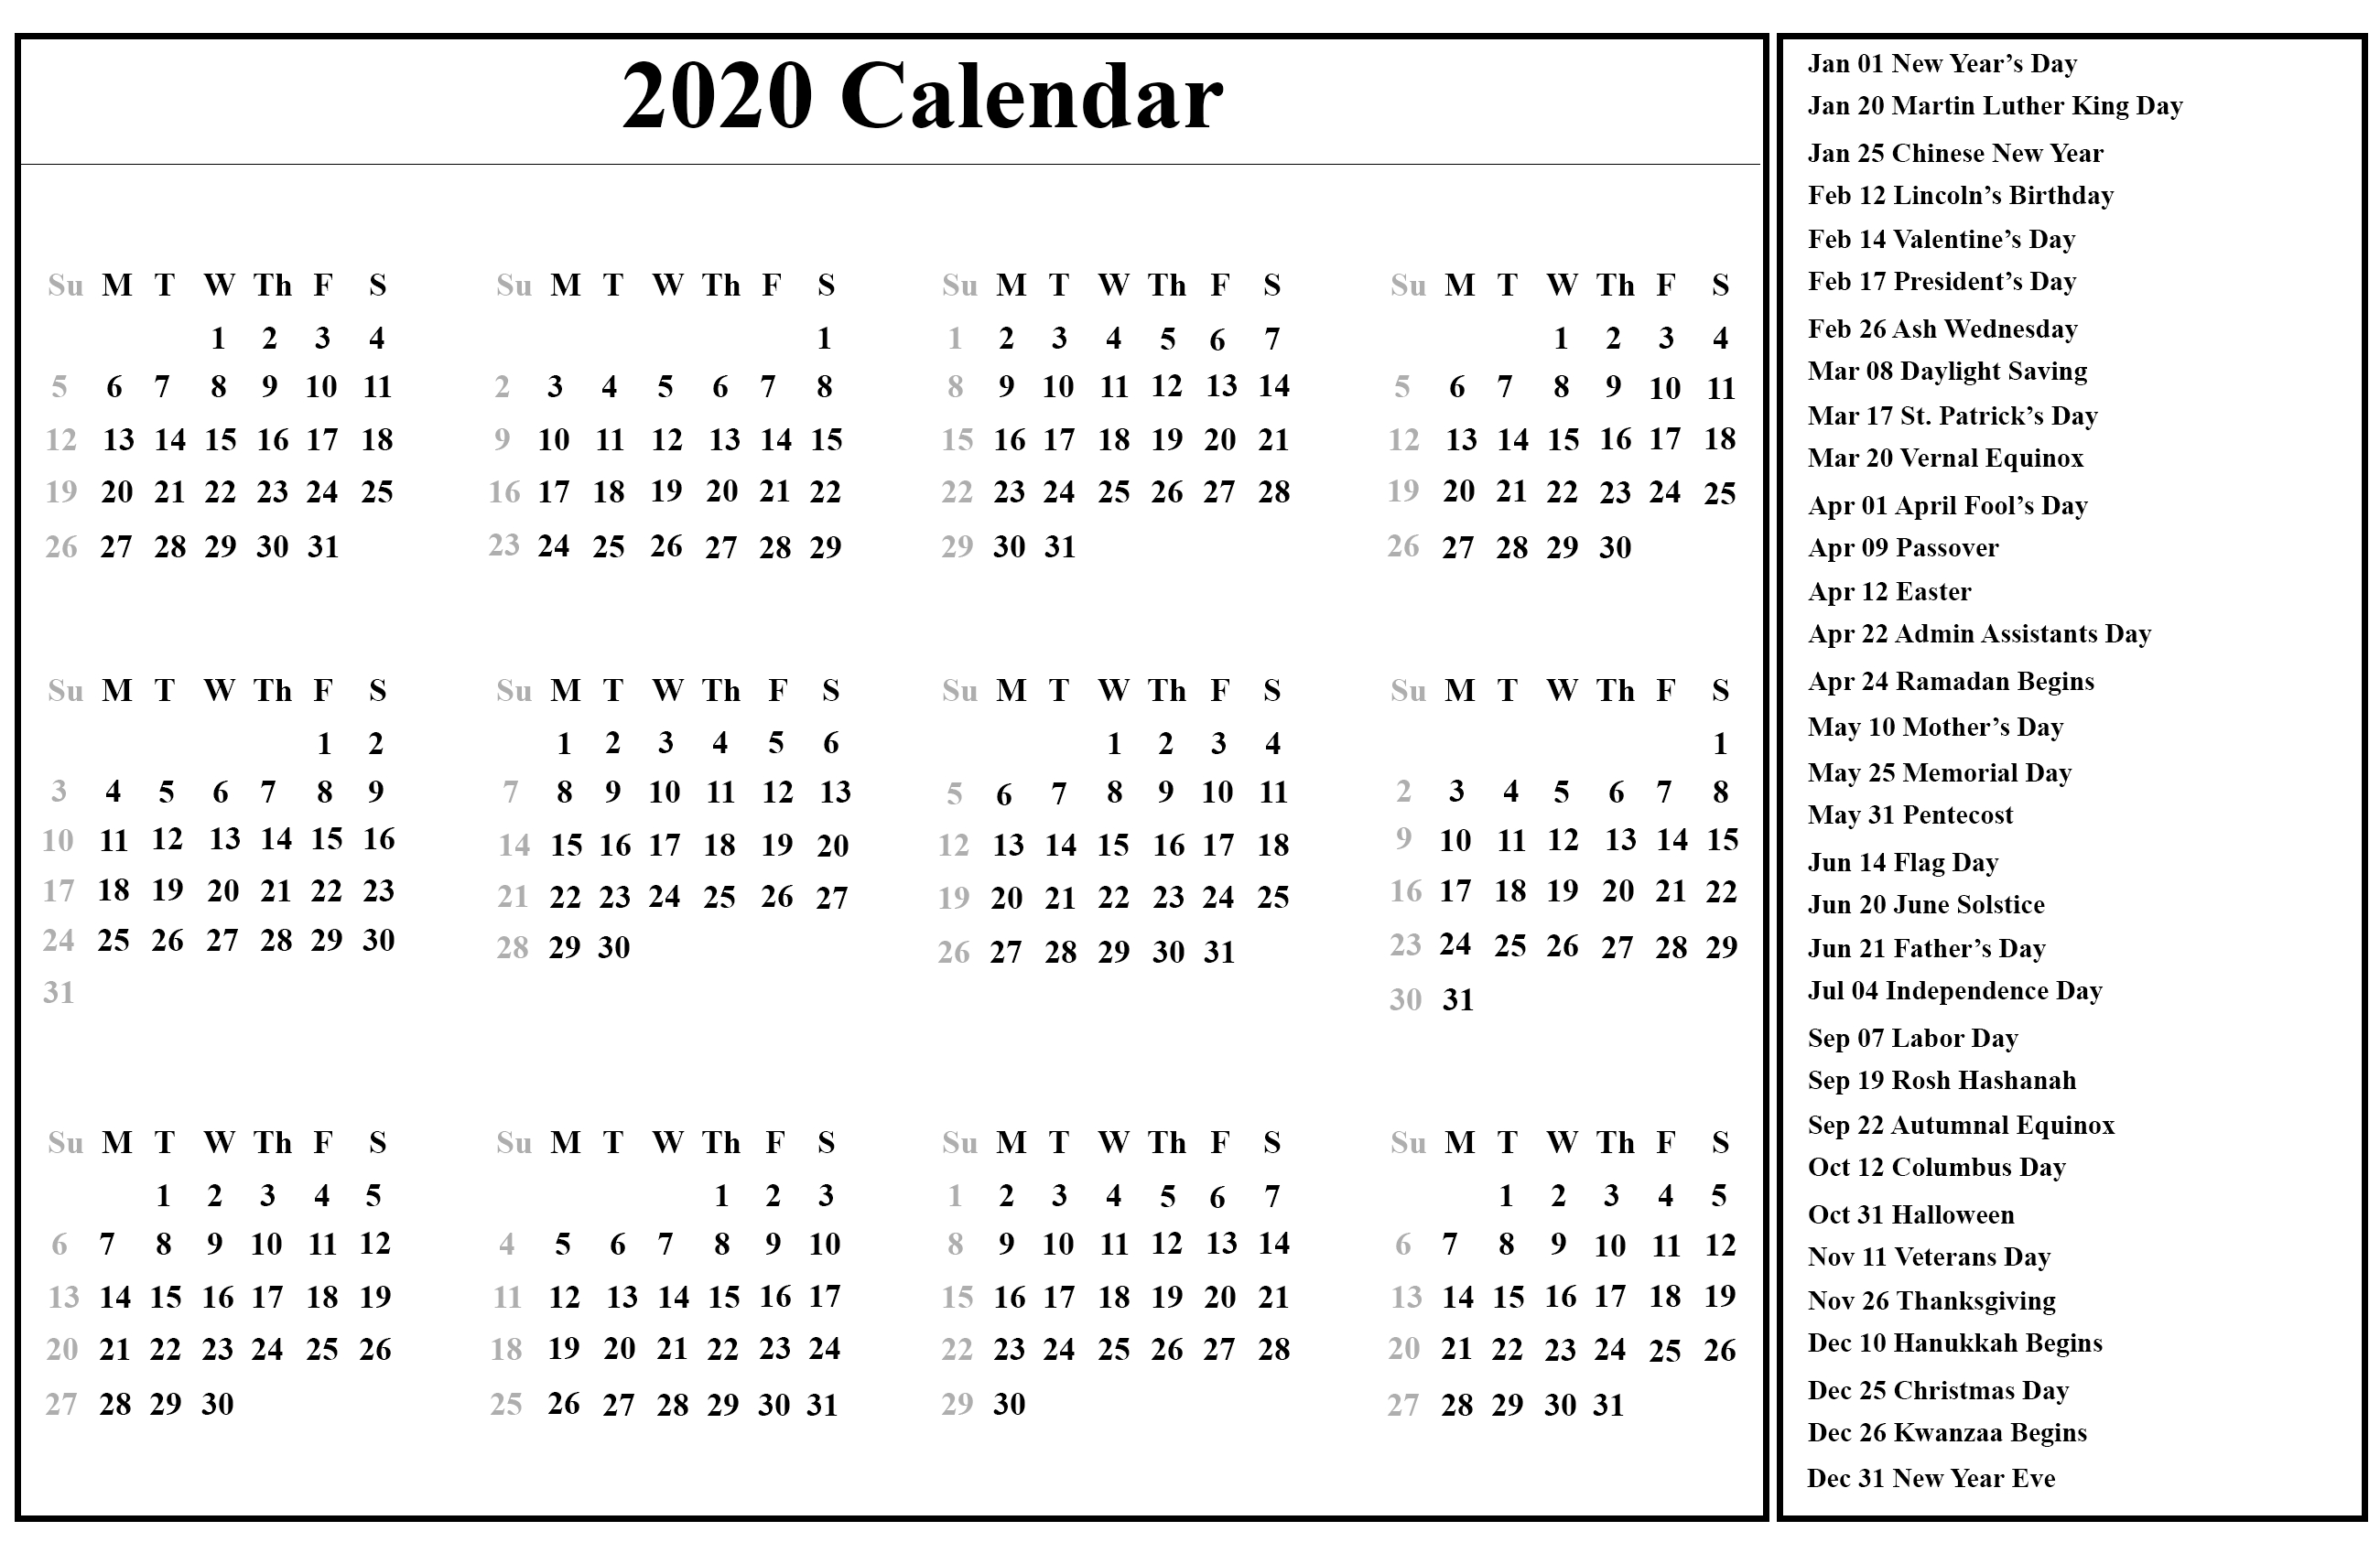 Forex holiday calendar 2020 india